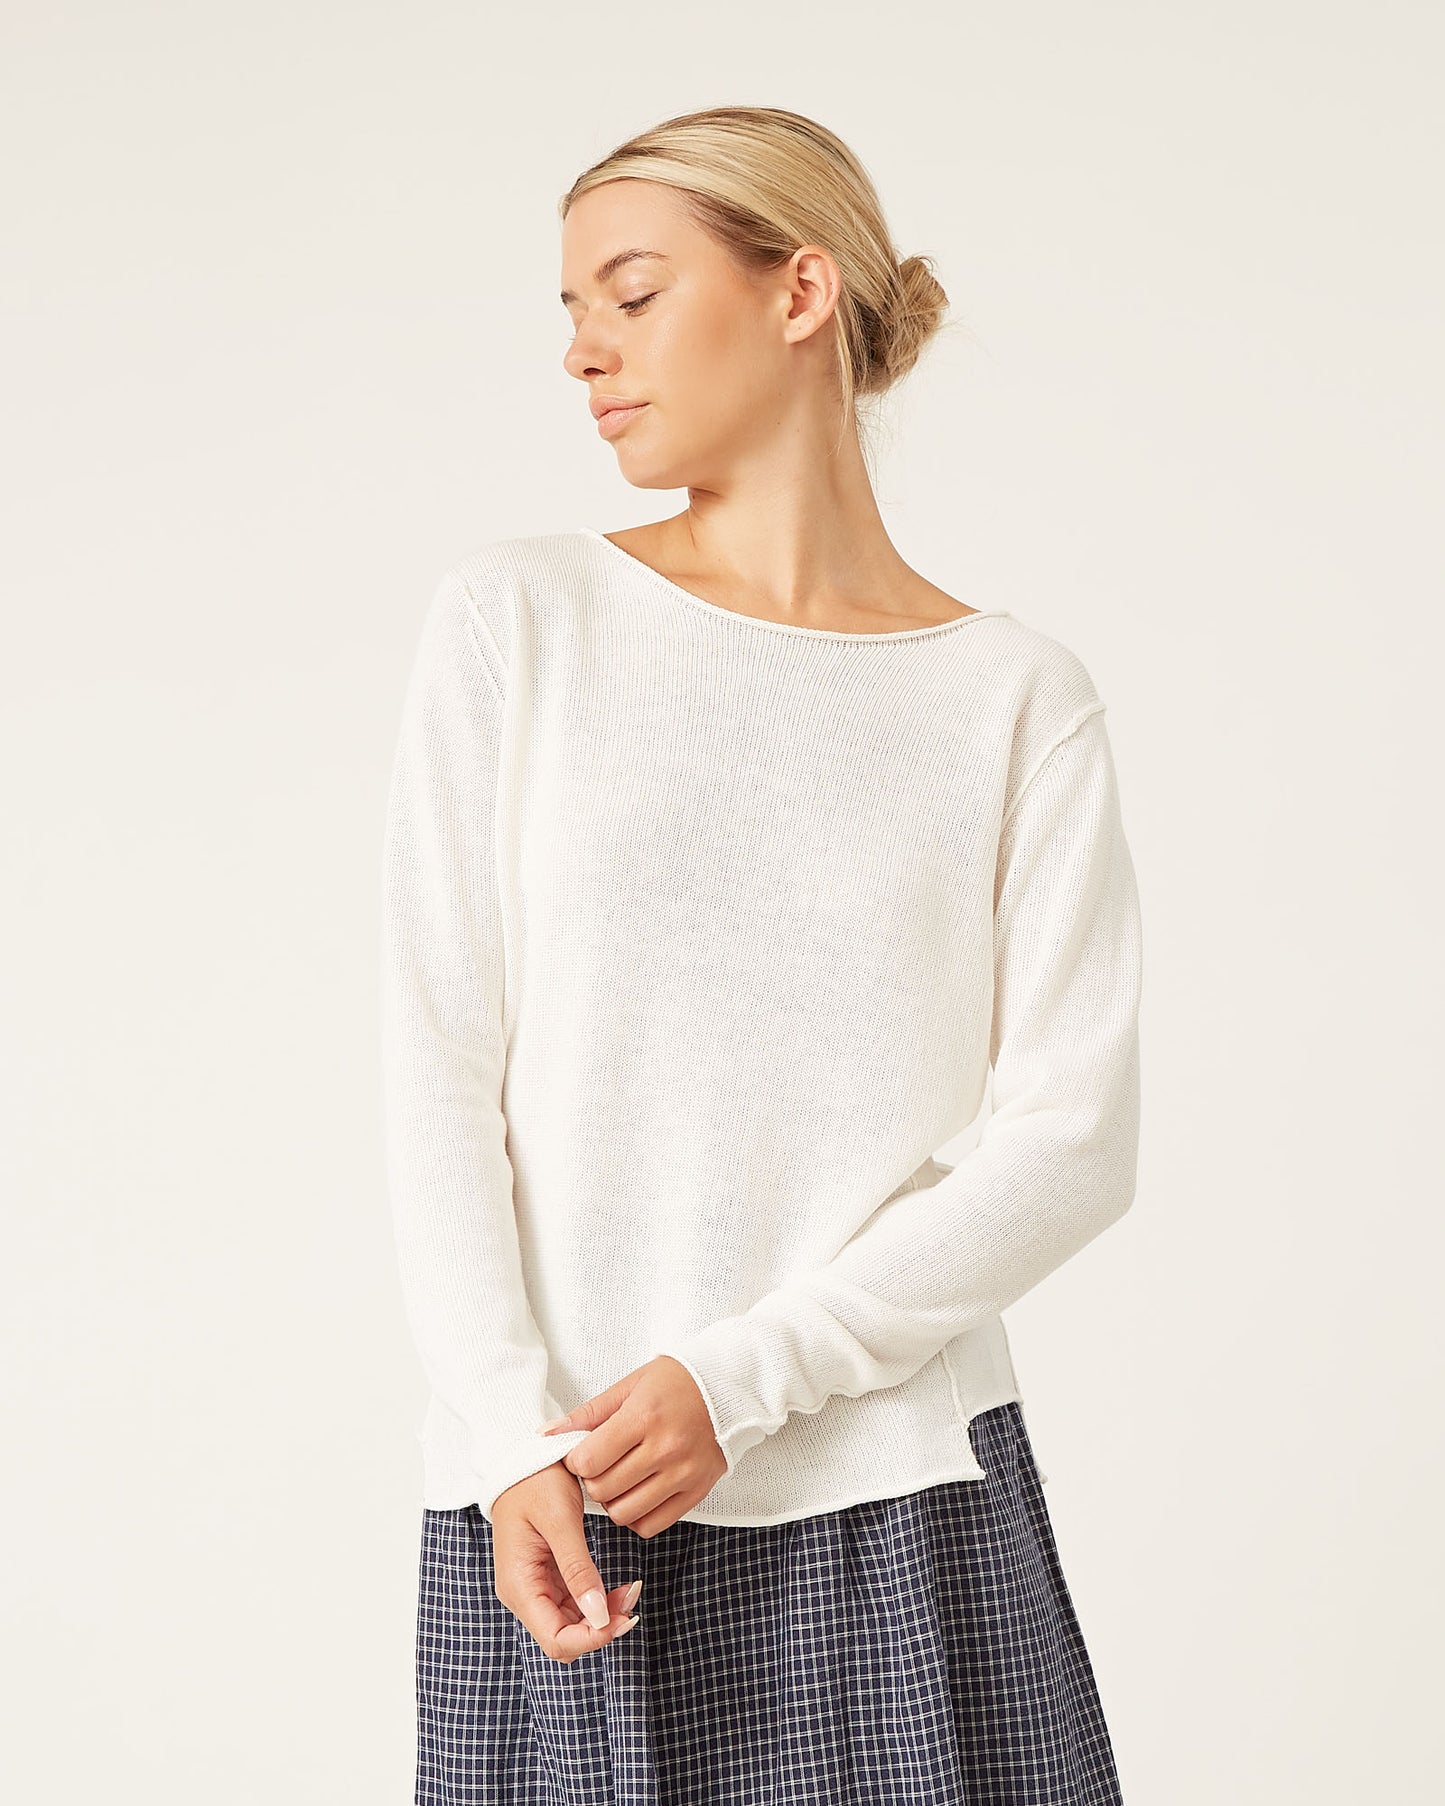 JACKIE linen-cotton sweater